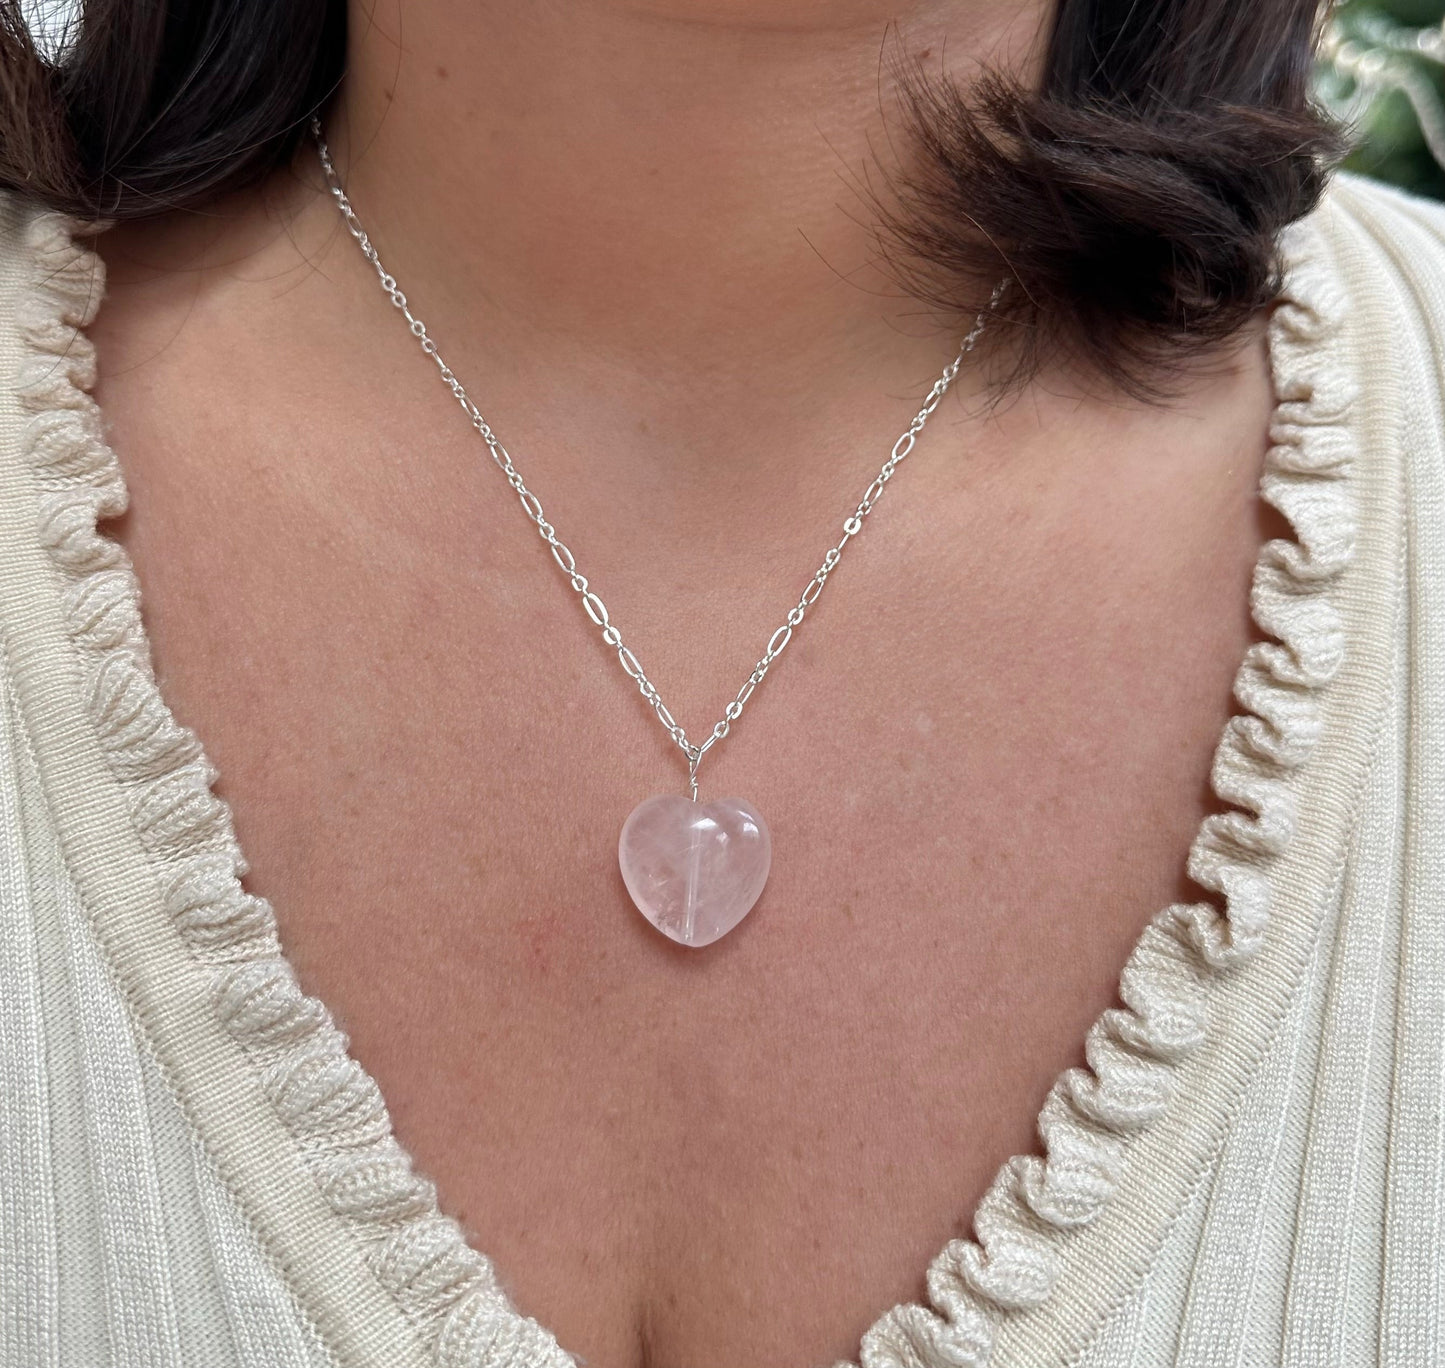 Give A Little Love Rose Quartz Heart Sterling Silver Pendant (NO CHAIN)